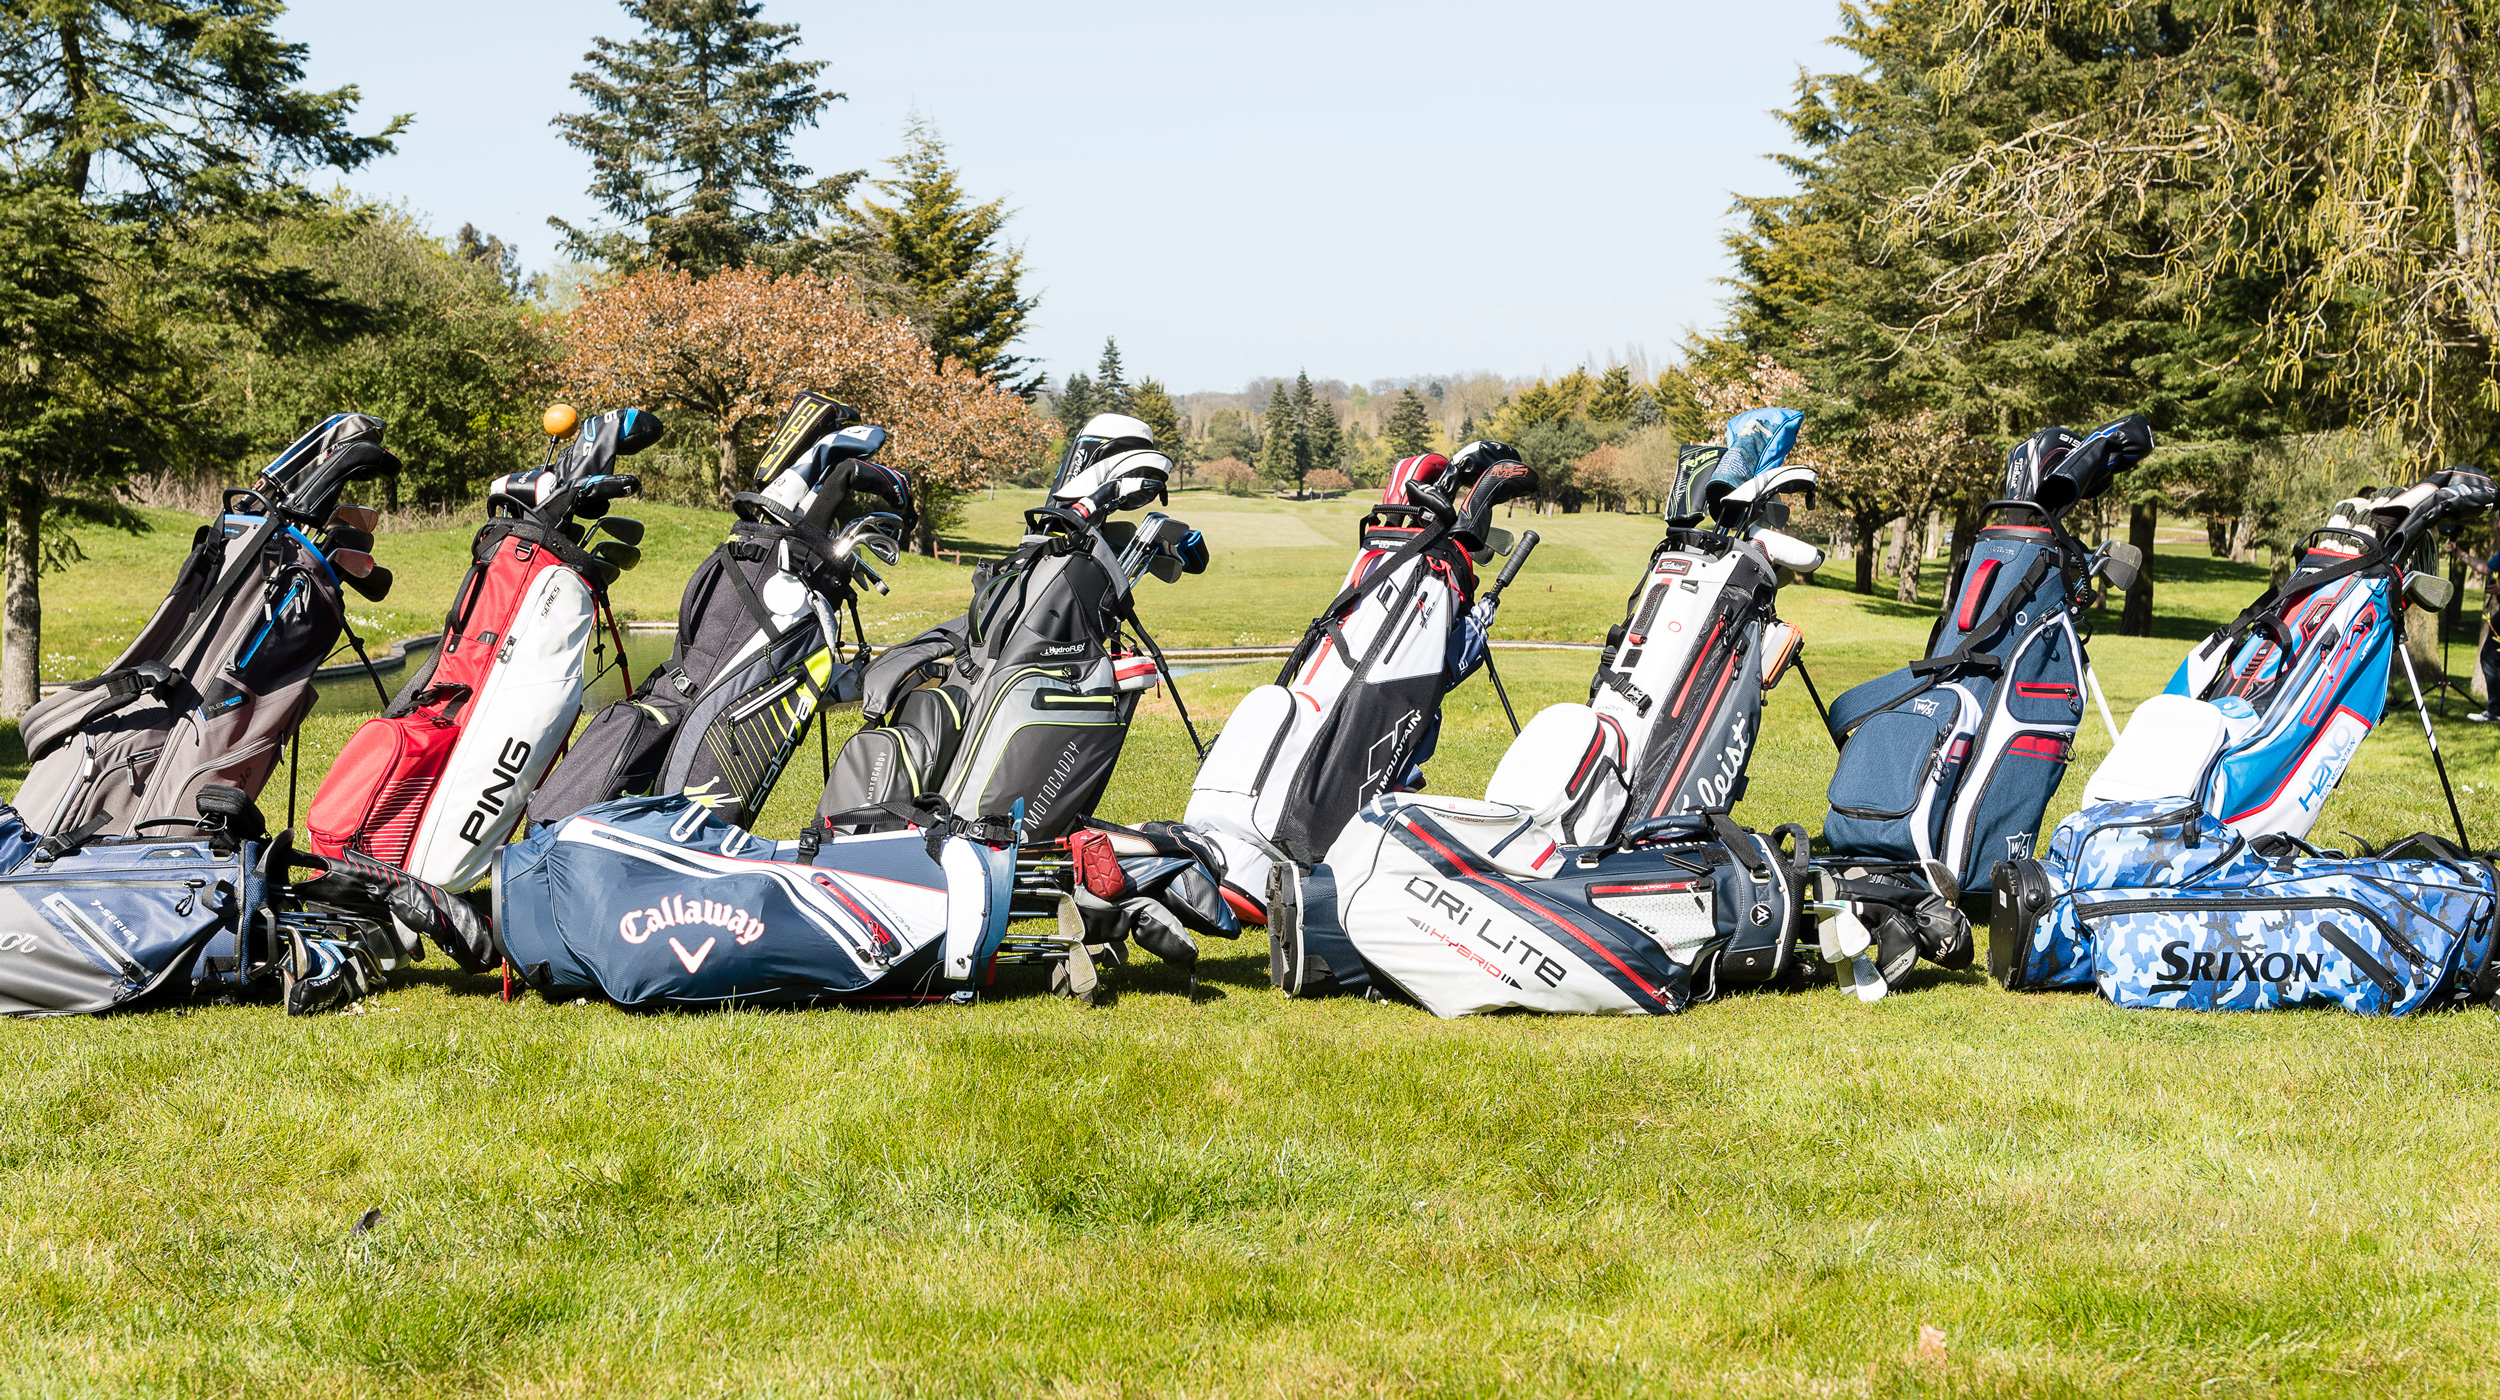 TaylorMade Pro Cart 8.0 Golf Cart Bag - Latest Range